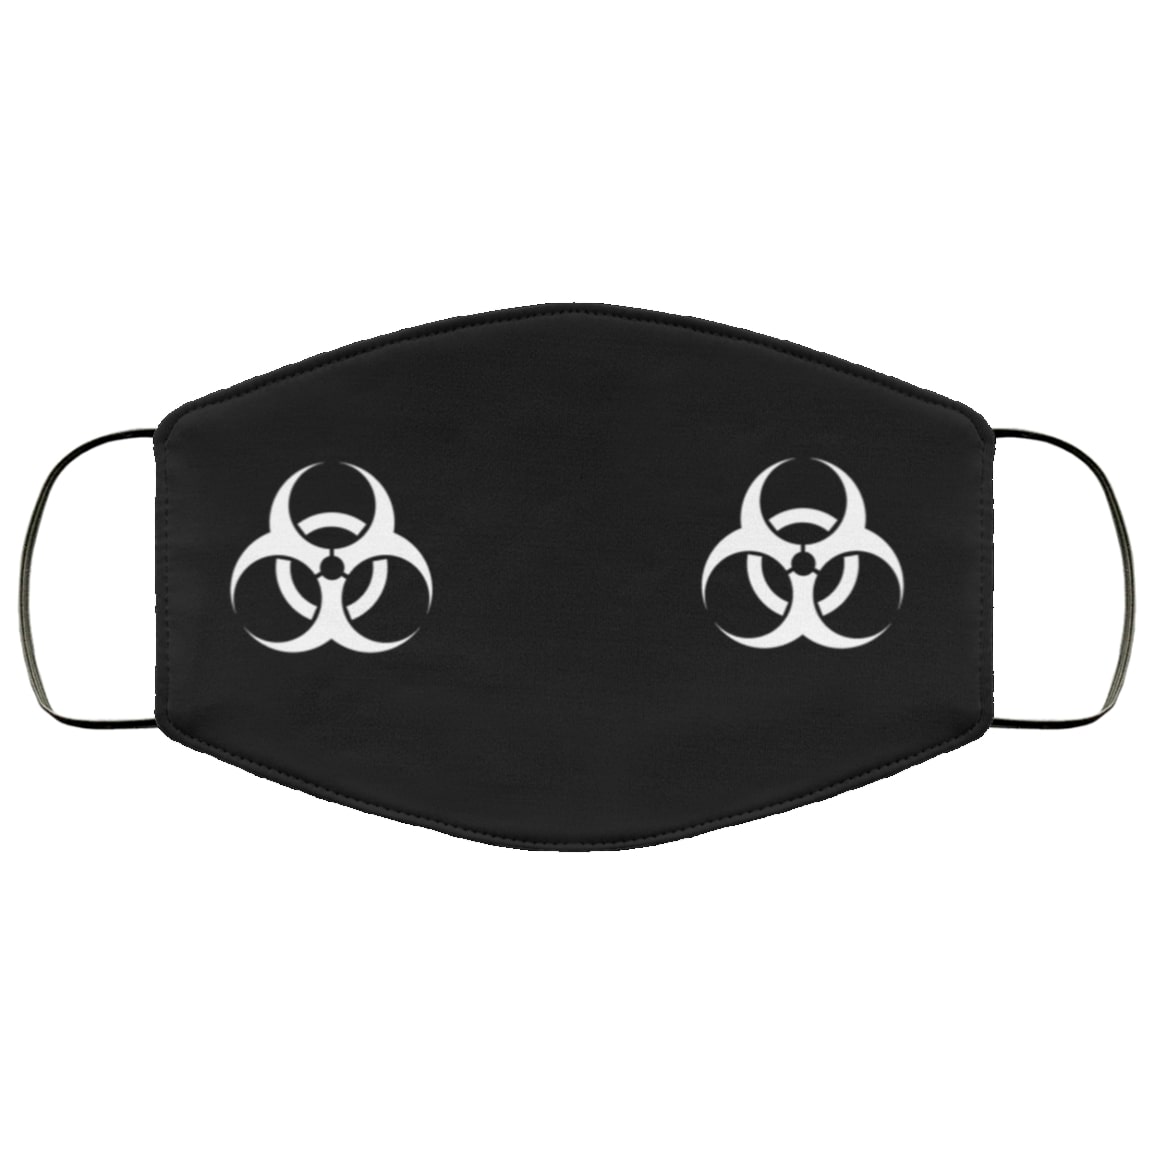 Biological hazard anti pollution face mask 3